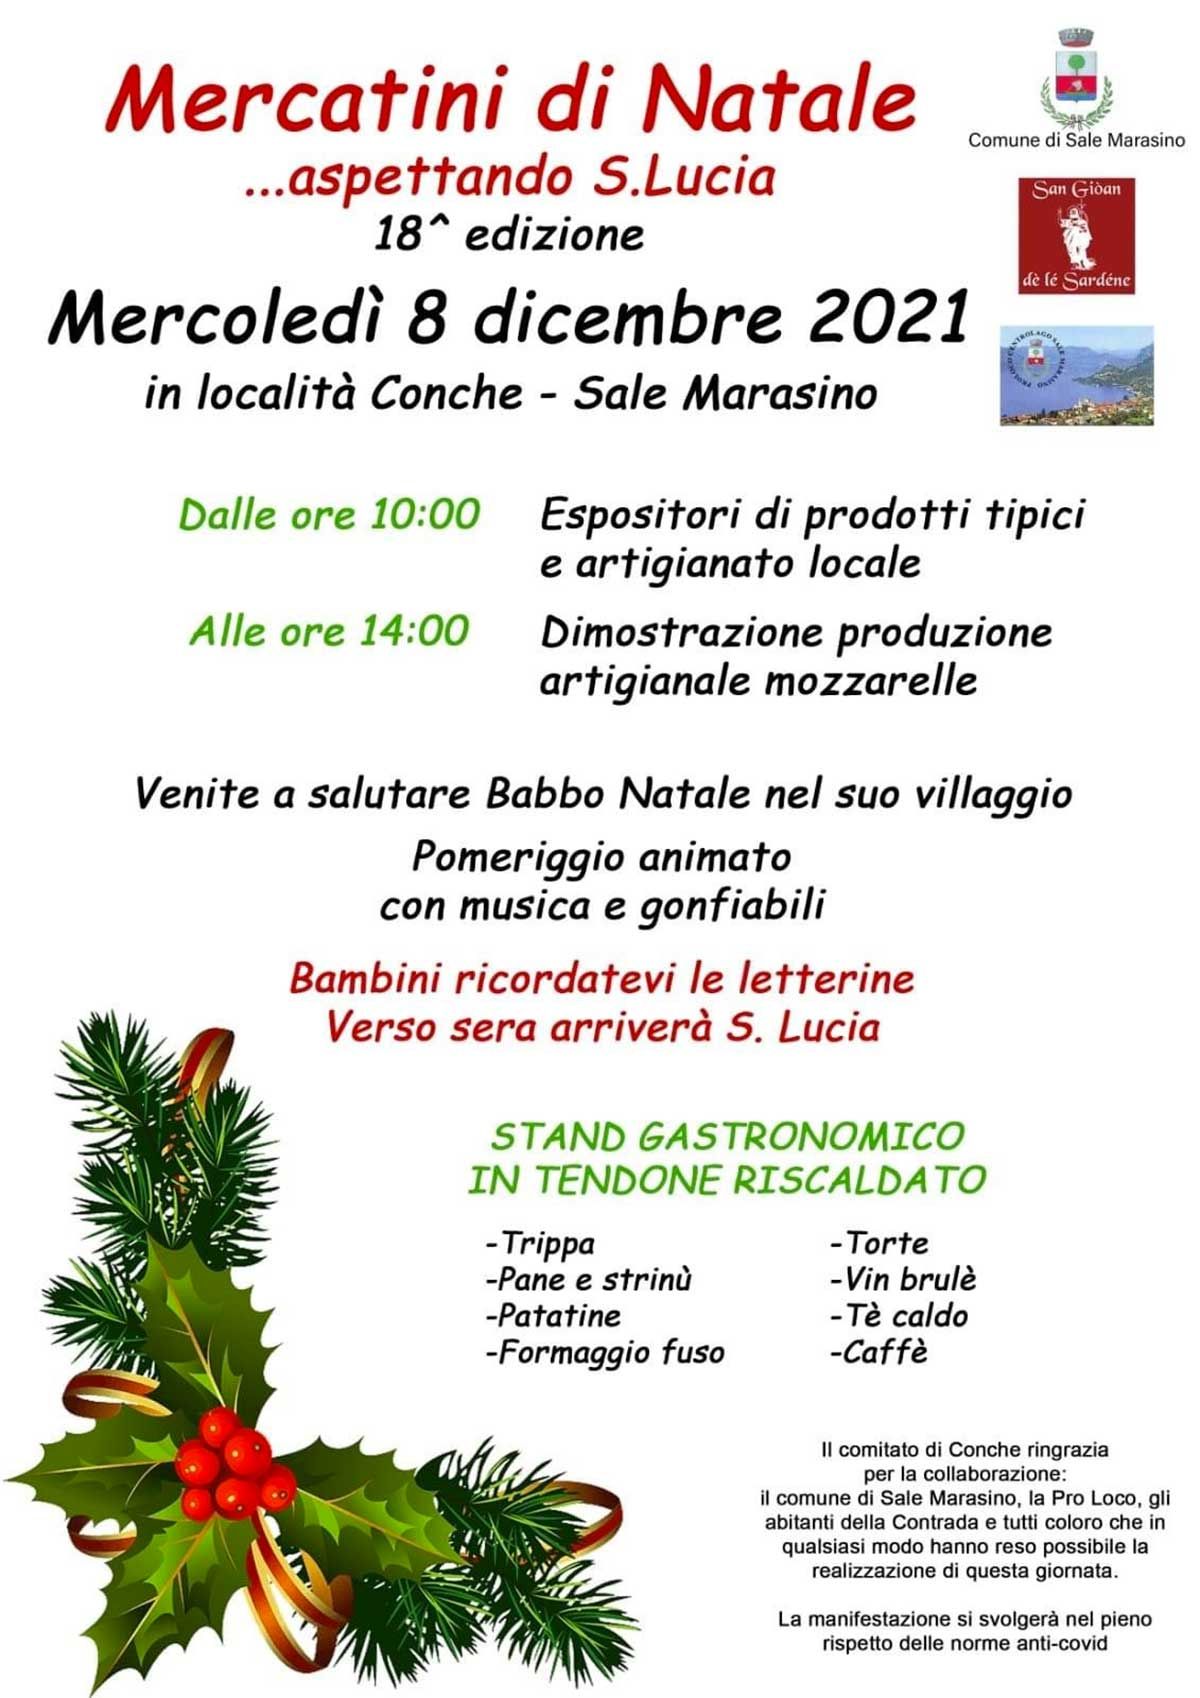 Mercatini-Sale-marasino-natale-2021